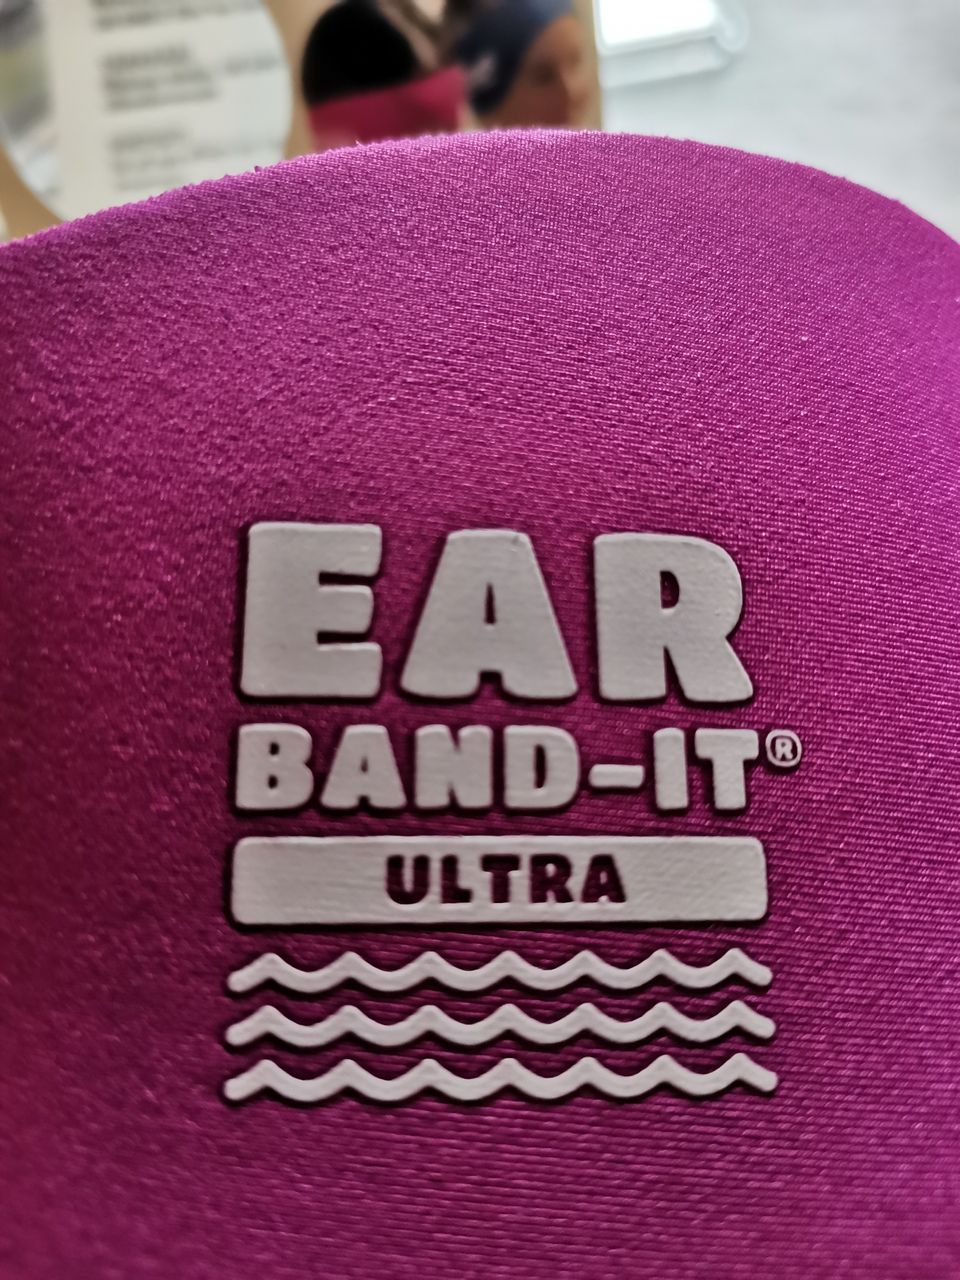 Uusi Ear band-it Ultra, 1-3v (S-koko) -panta